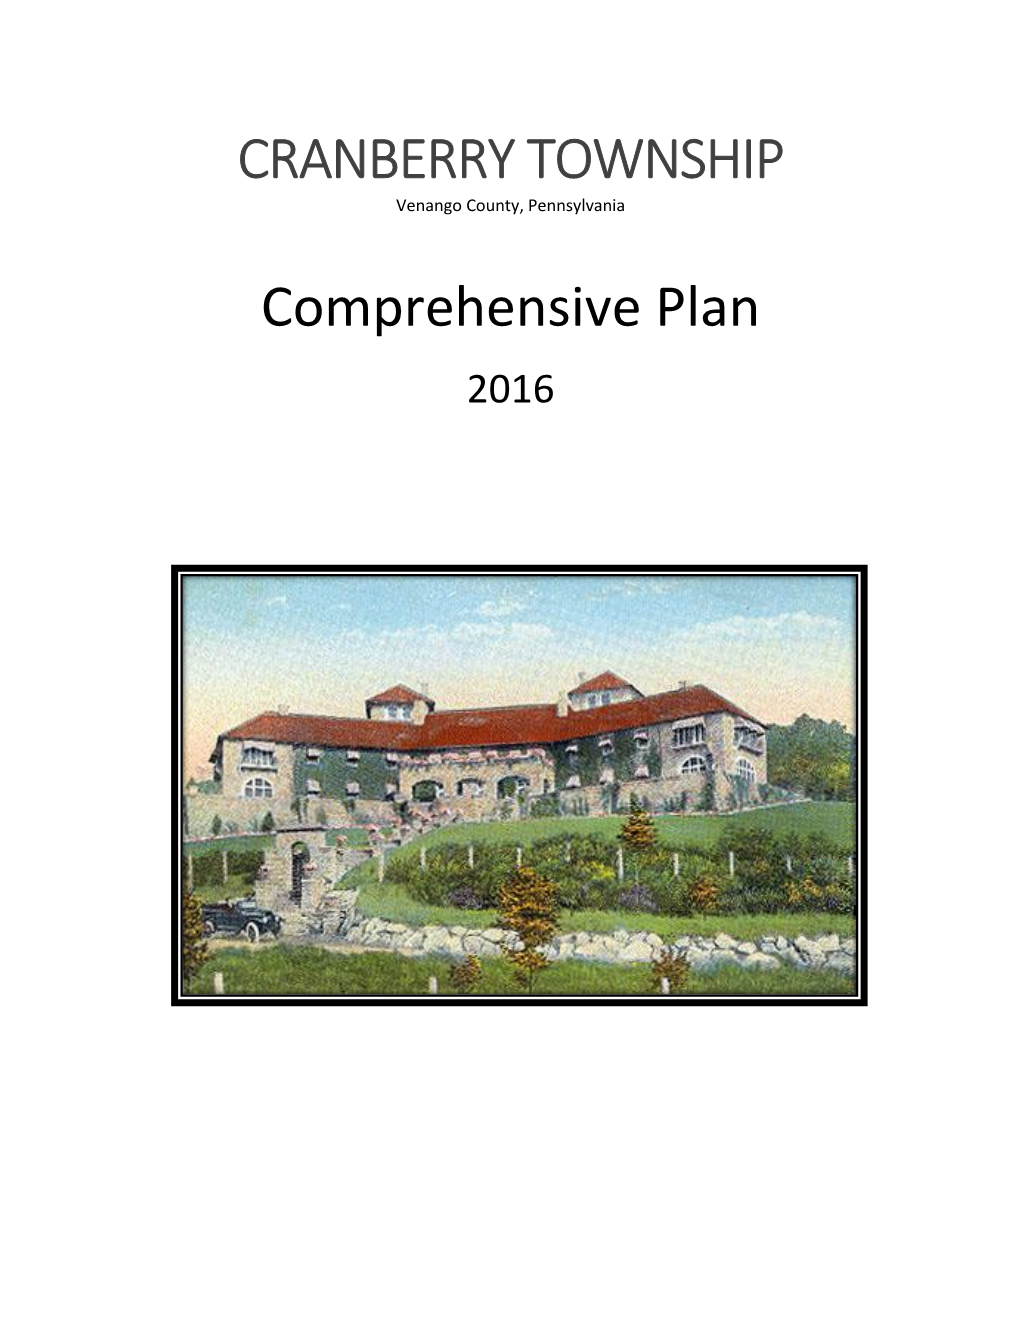 Cranberry Township Comprehensive Plan